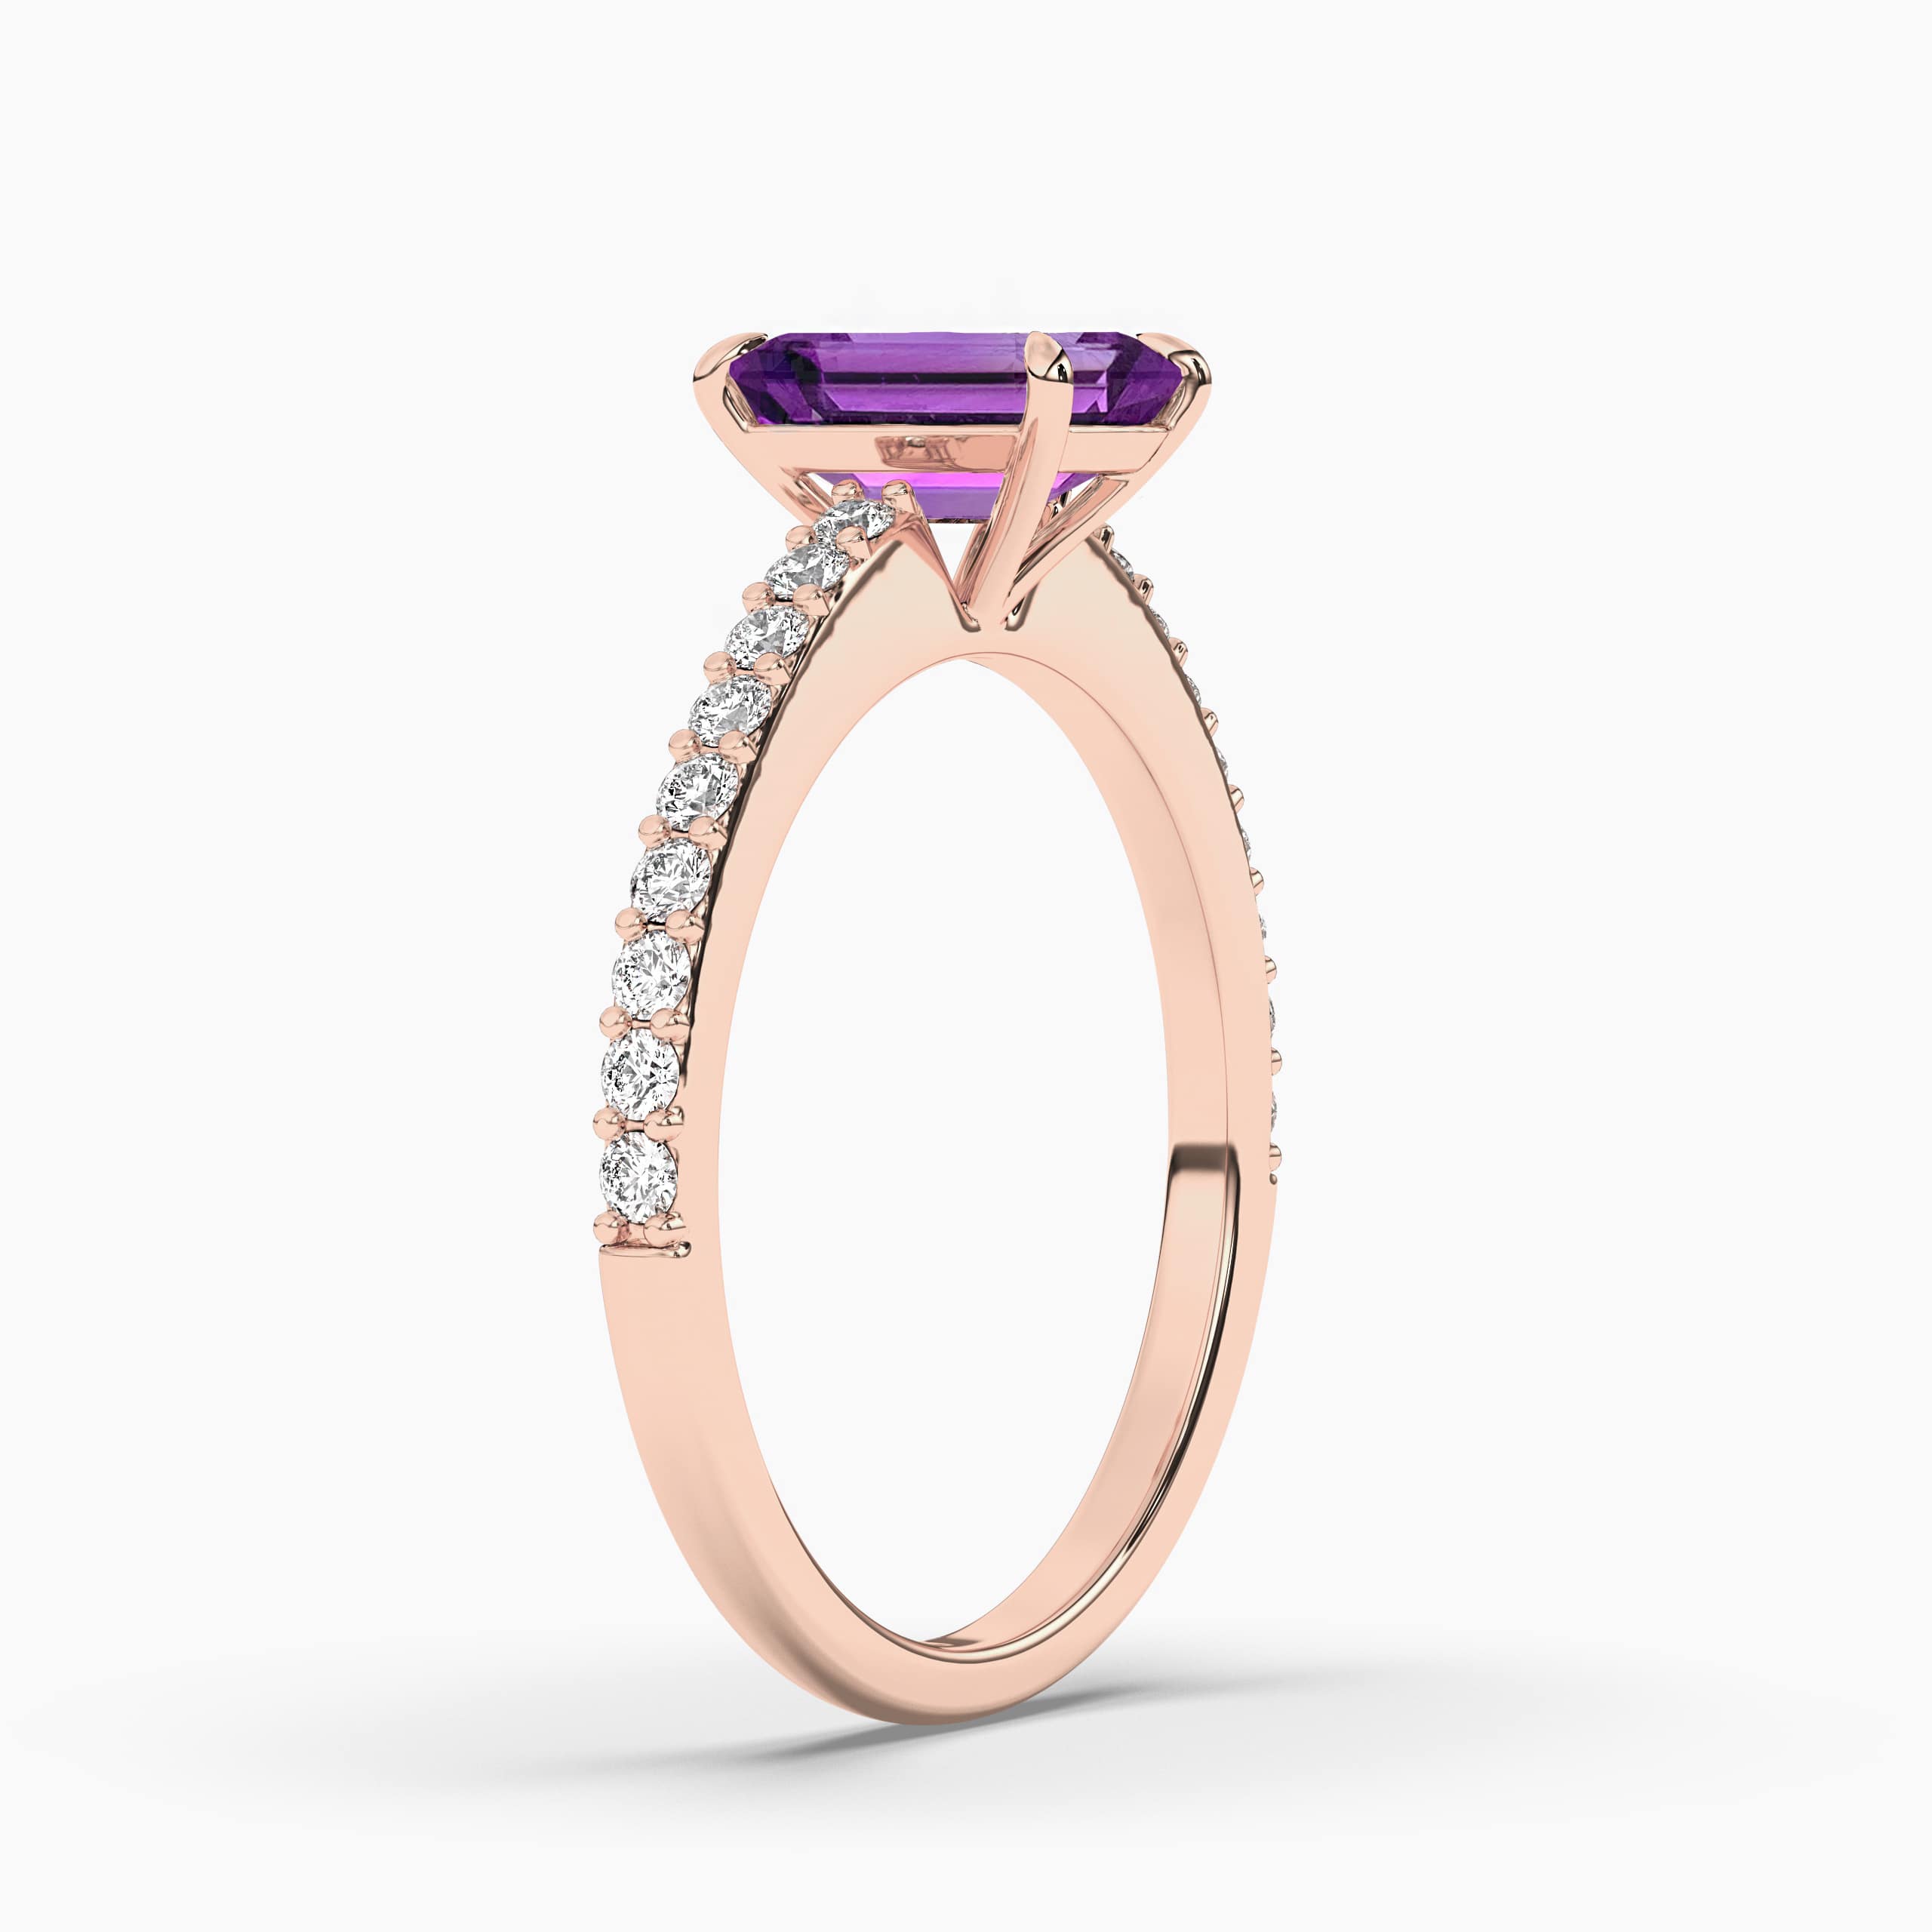 Emerald Cut Amethyst Ring Rose Gold, Amethyst Engagement Ring, February Birthstone In Rose  Gold 